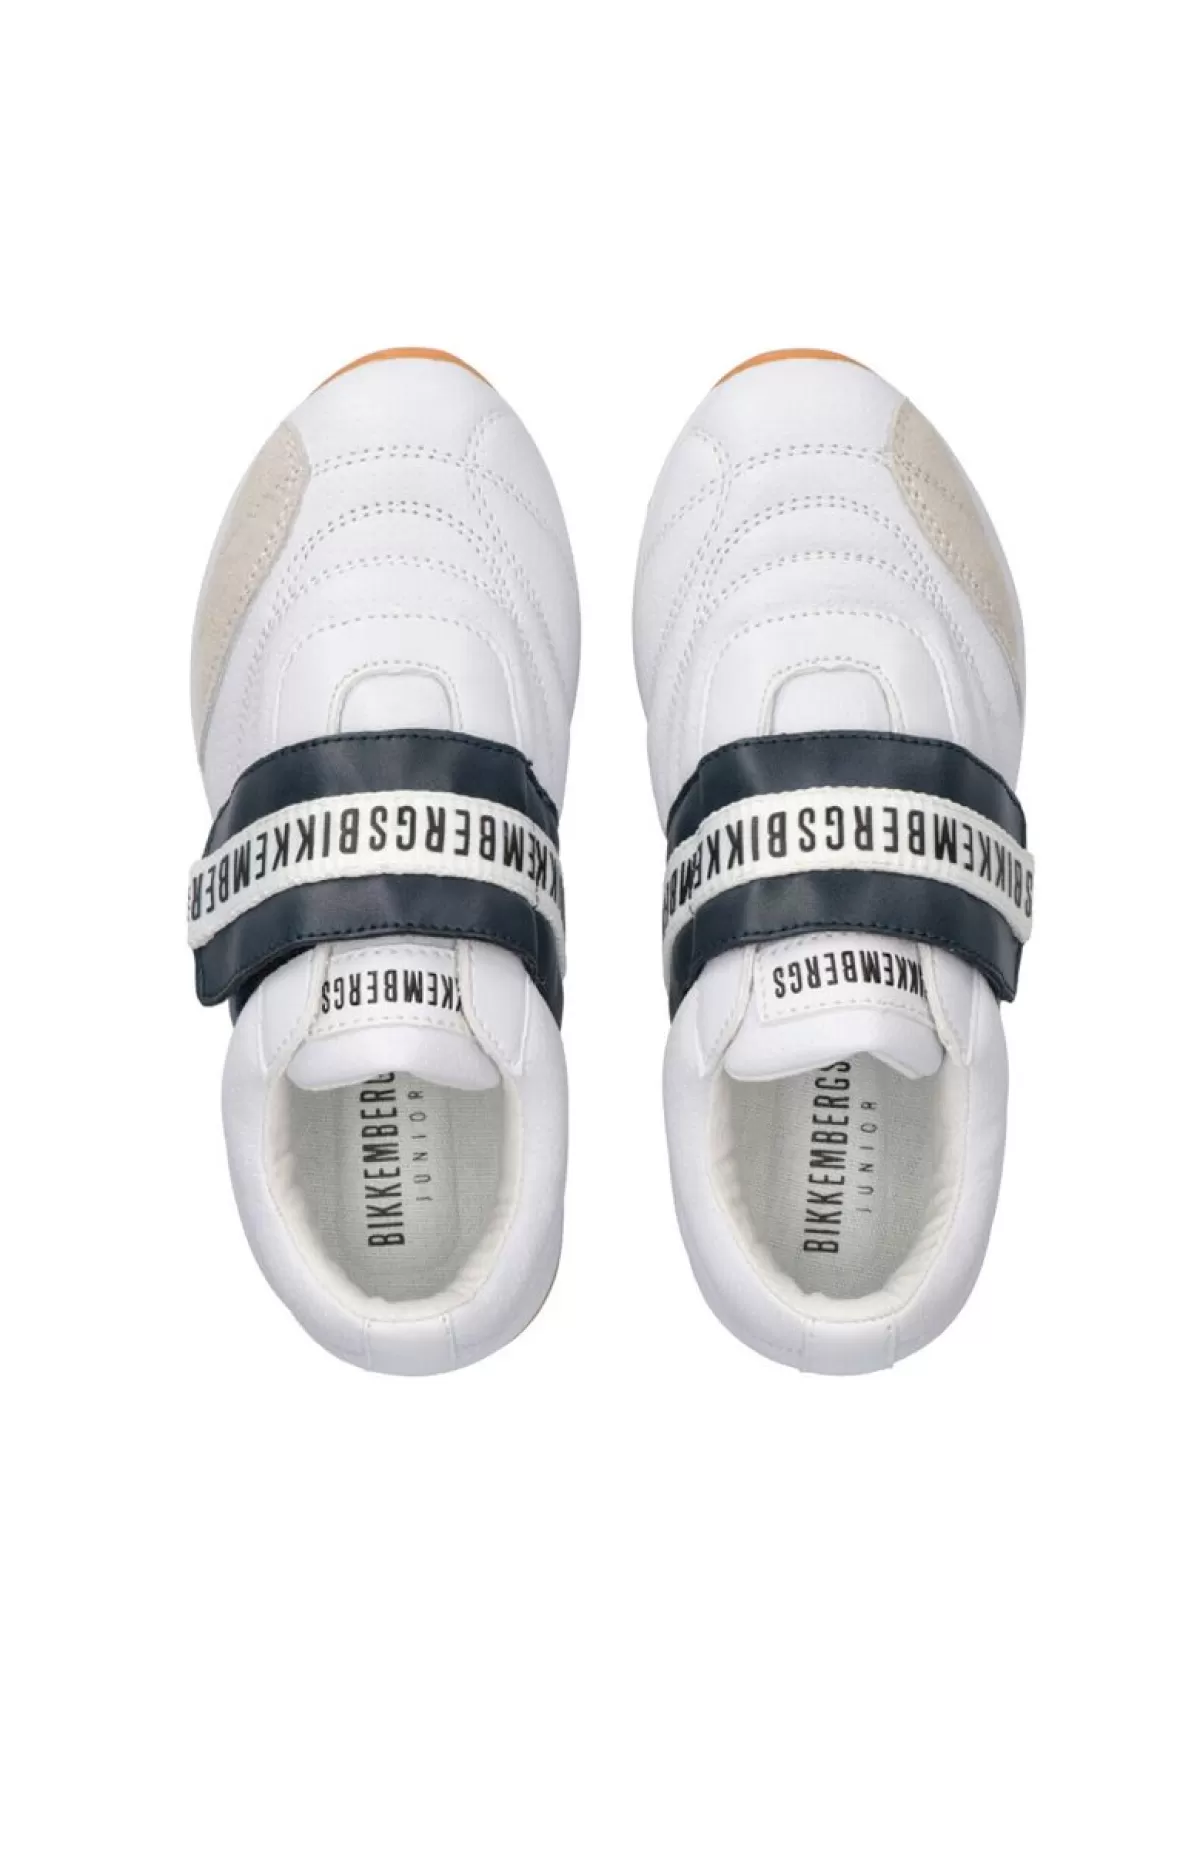 Bikkembergs Kids' Sneakers With Velcro "Evans" White/Blue Online